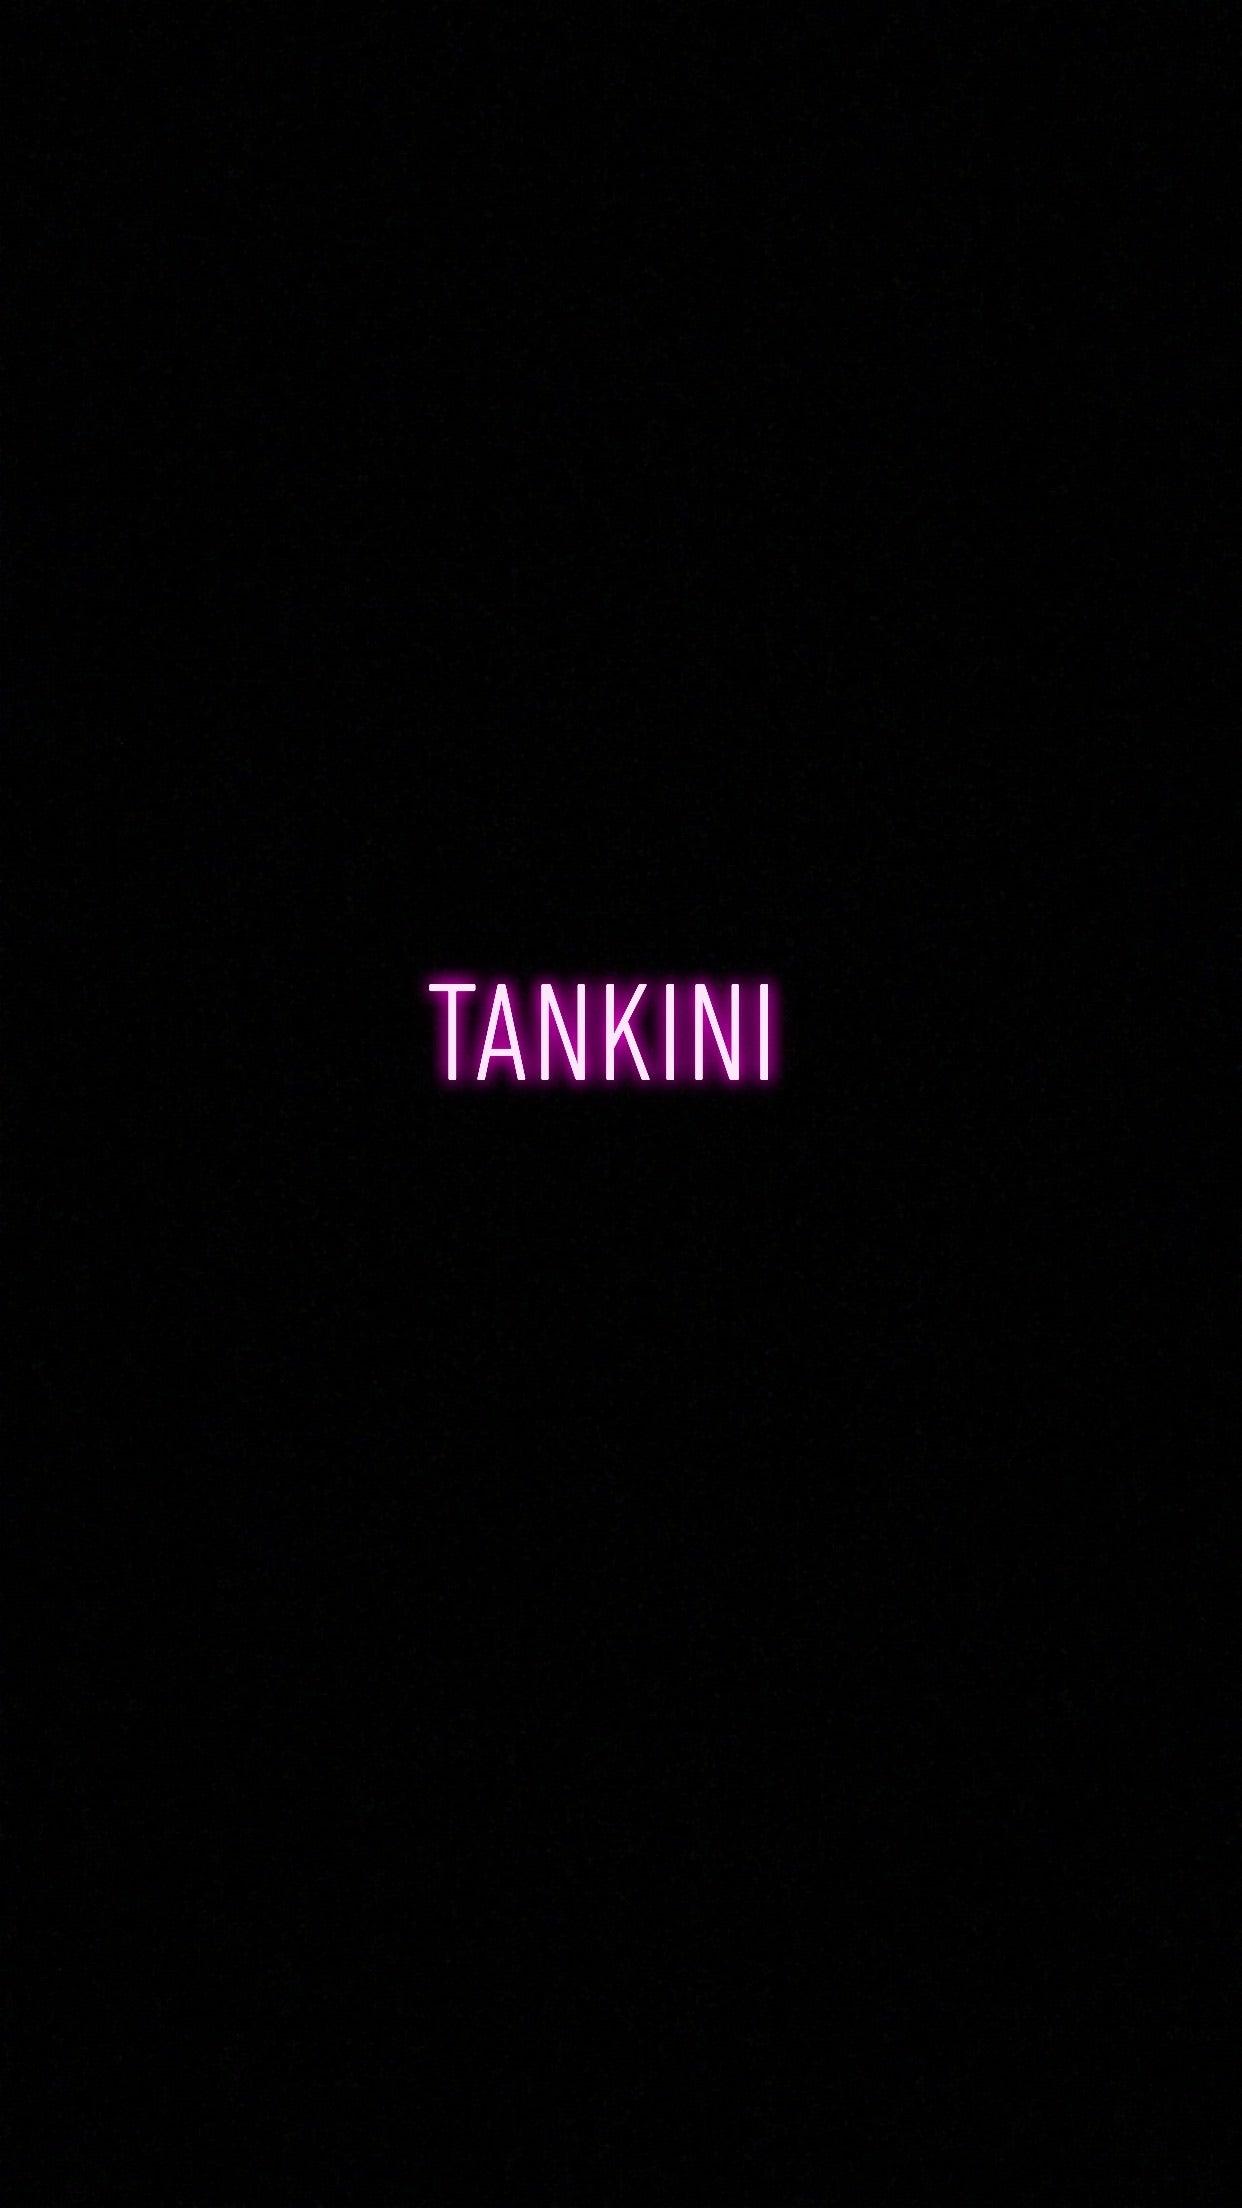 Tankini - Mint Leafe Boutique 